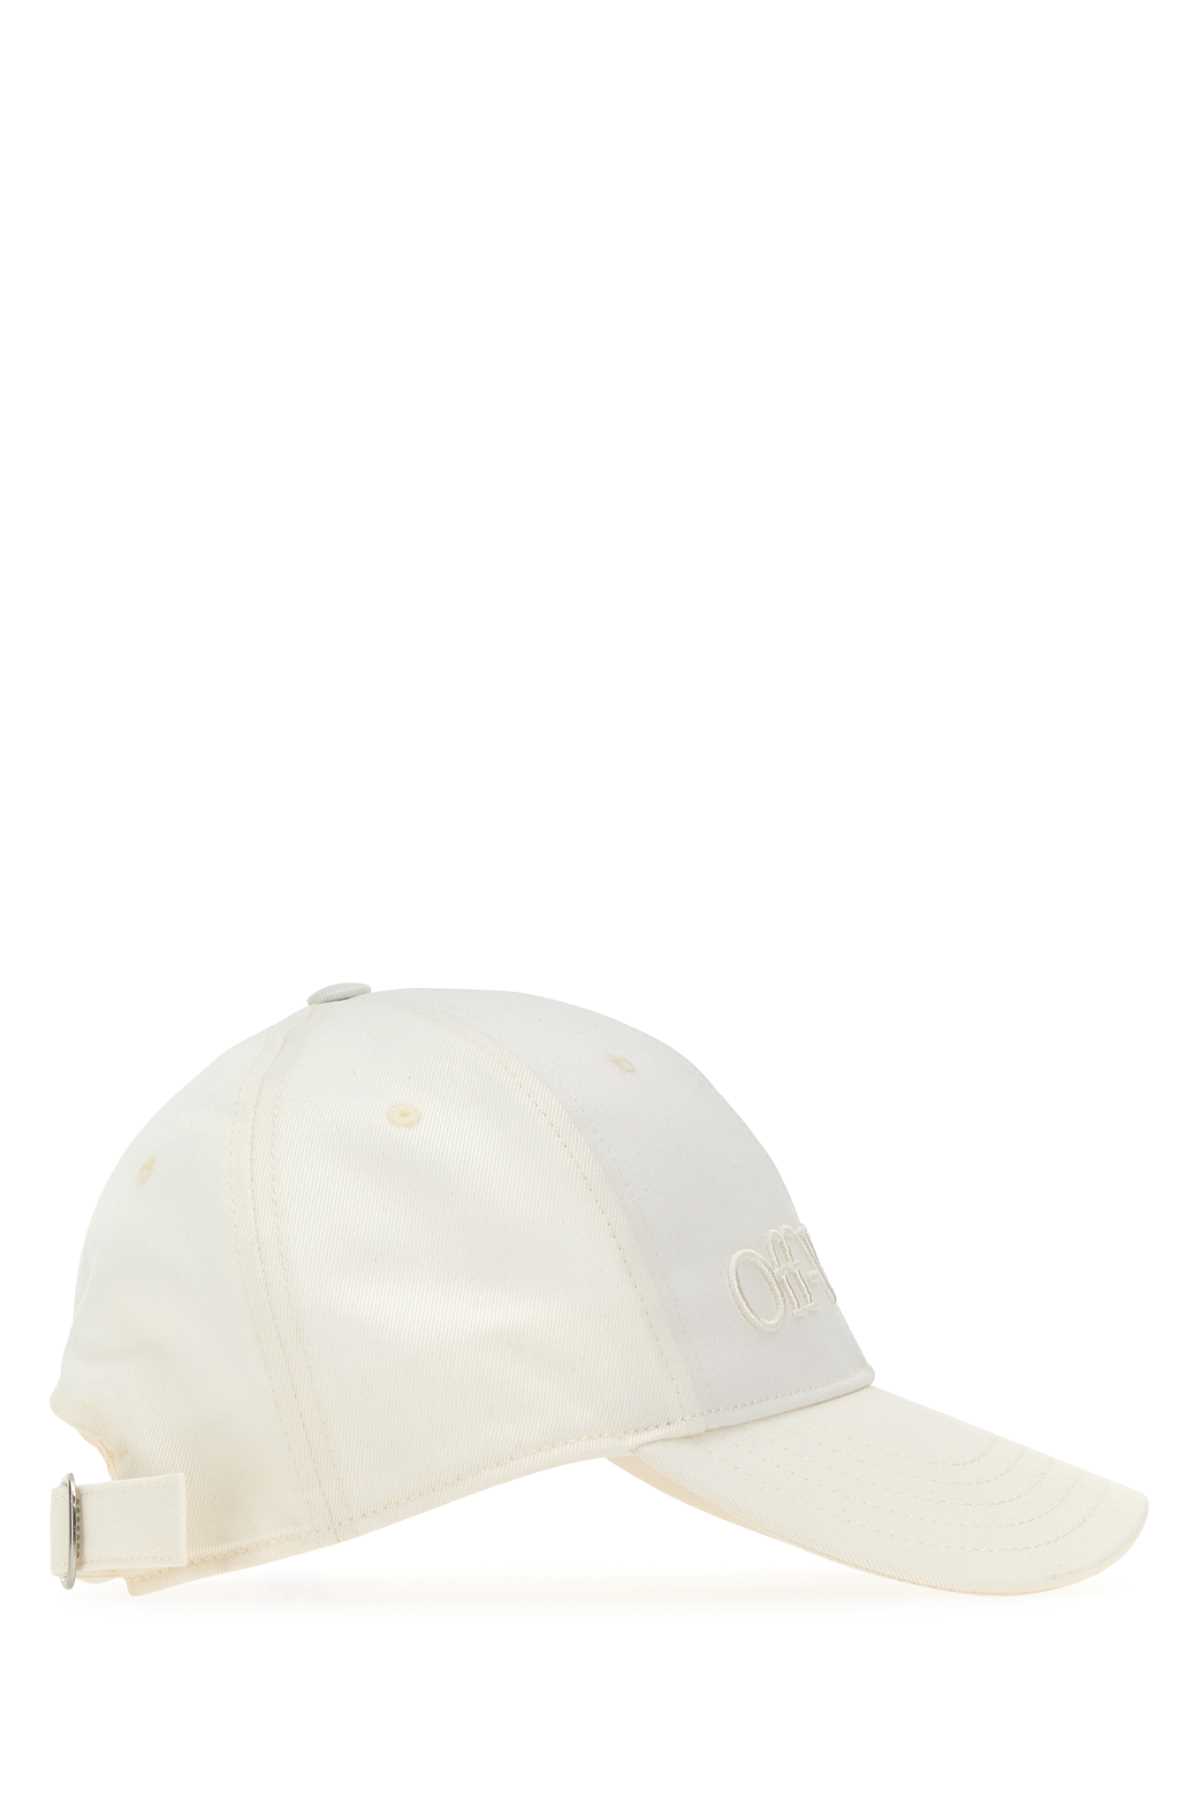 OFF-WHITE WHITE COTTON BASEBALL CAP